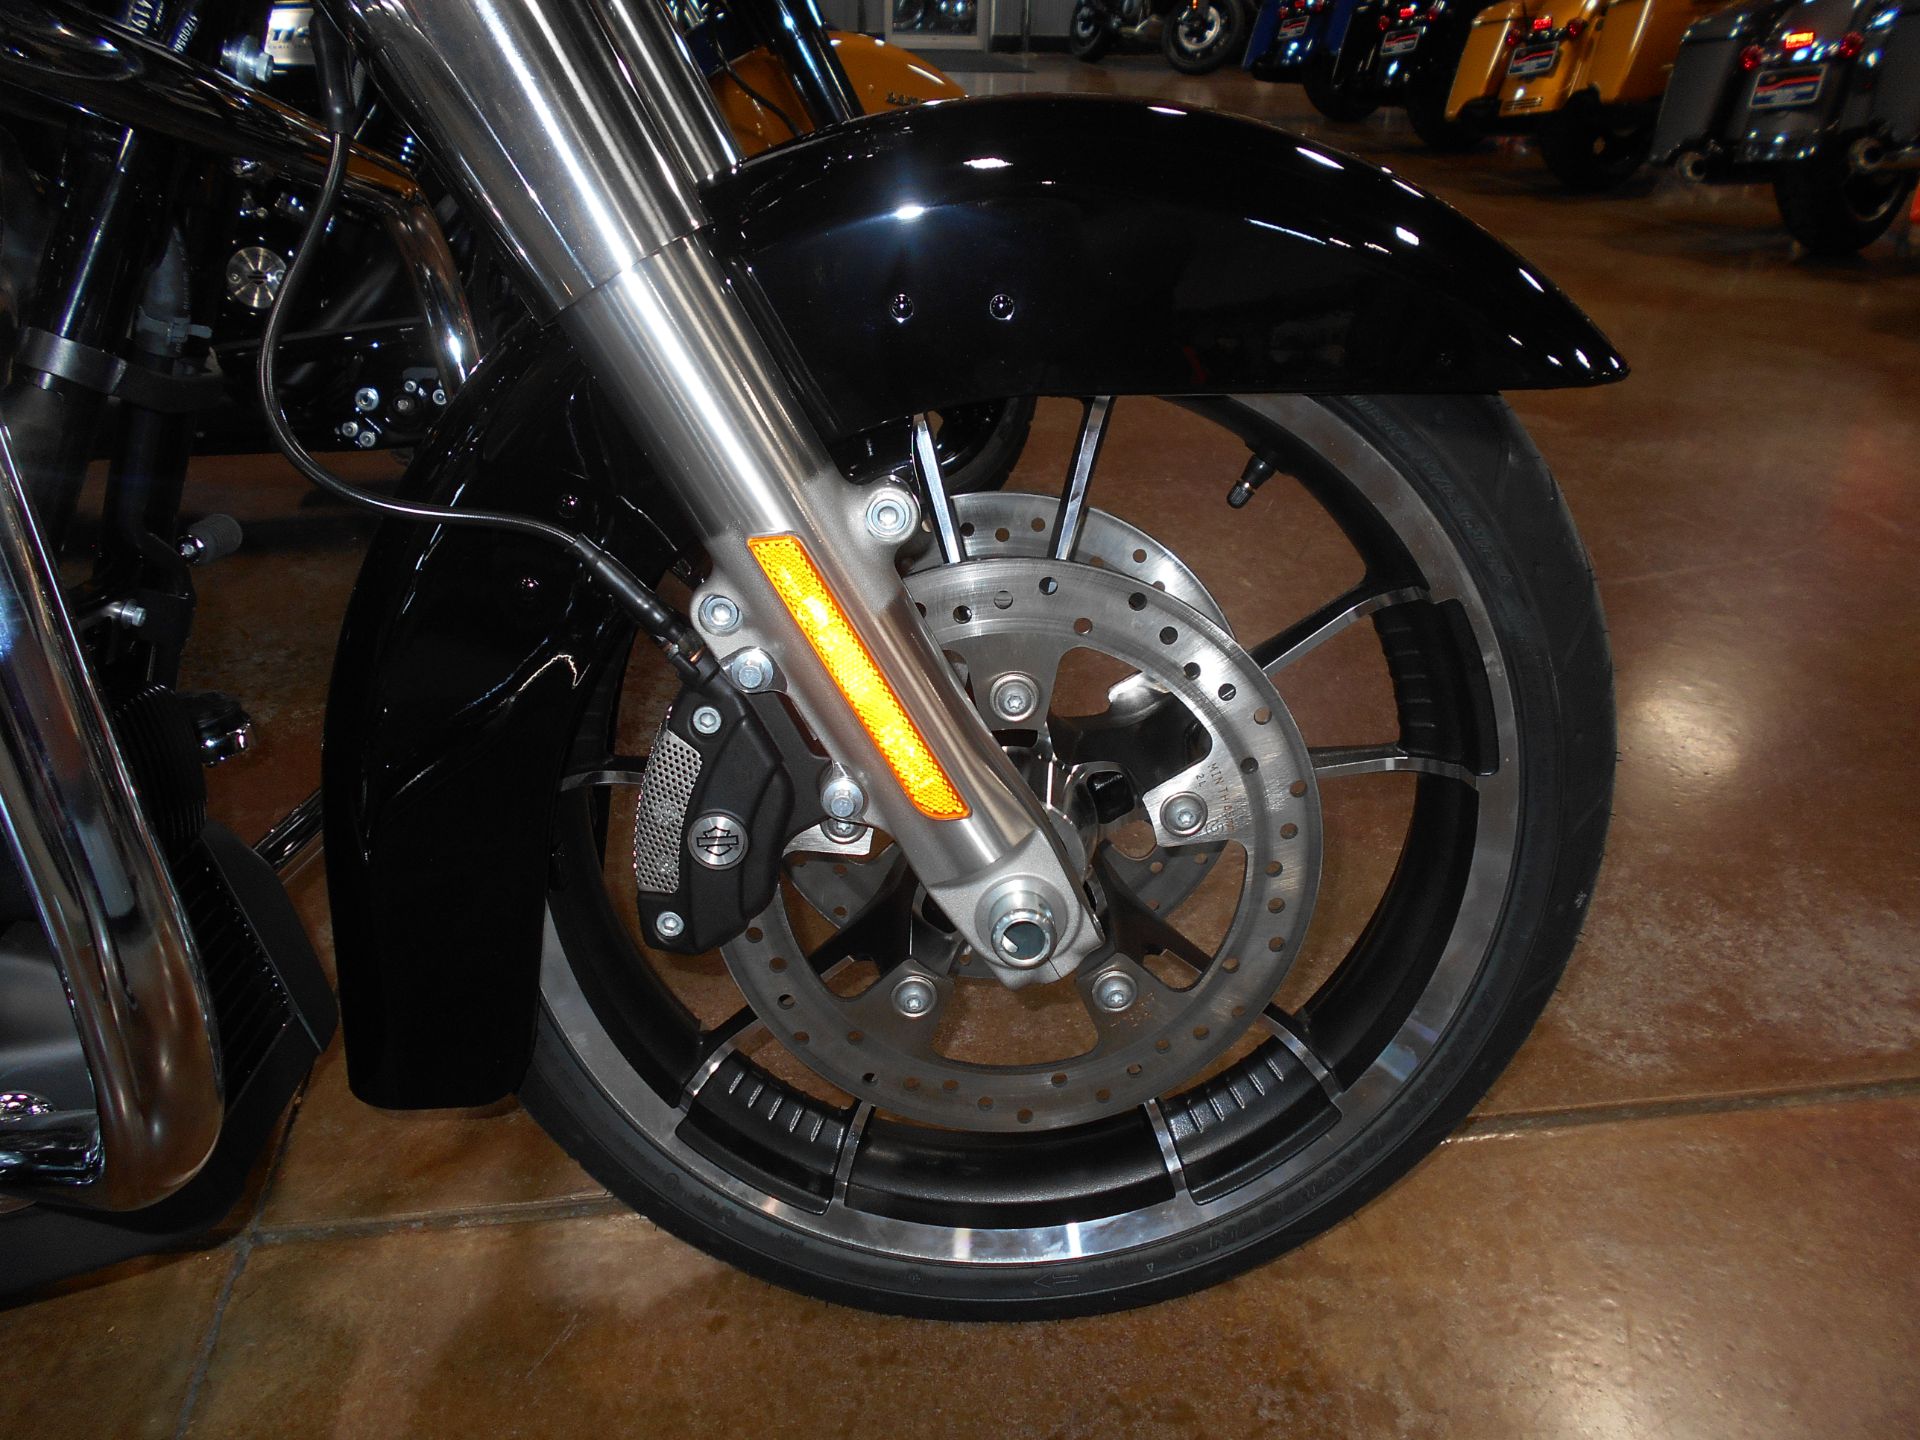 2023 Harley-Davidson Street Glide® in Mauston, Wisconsin - Photo 3